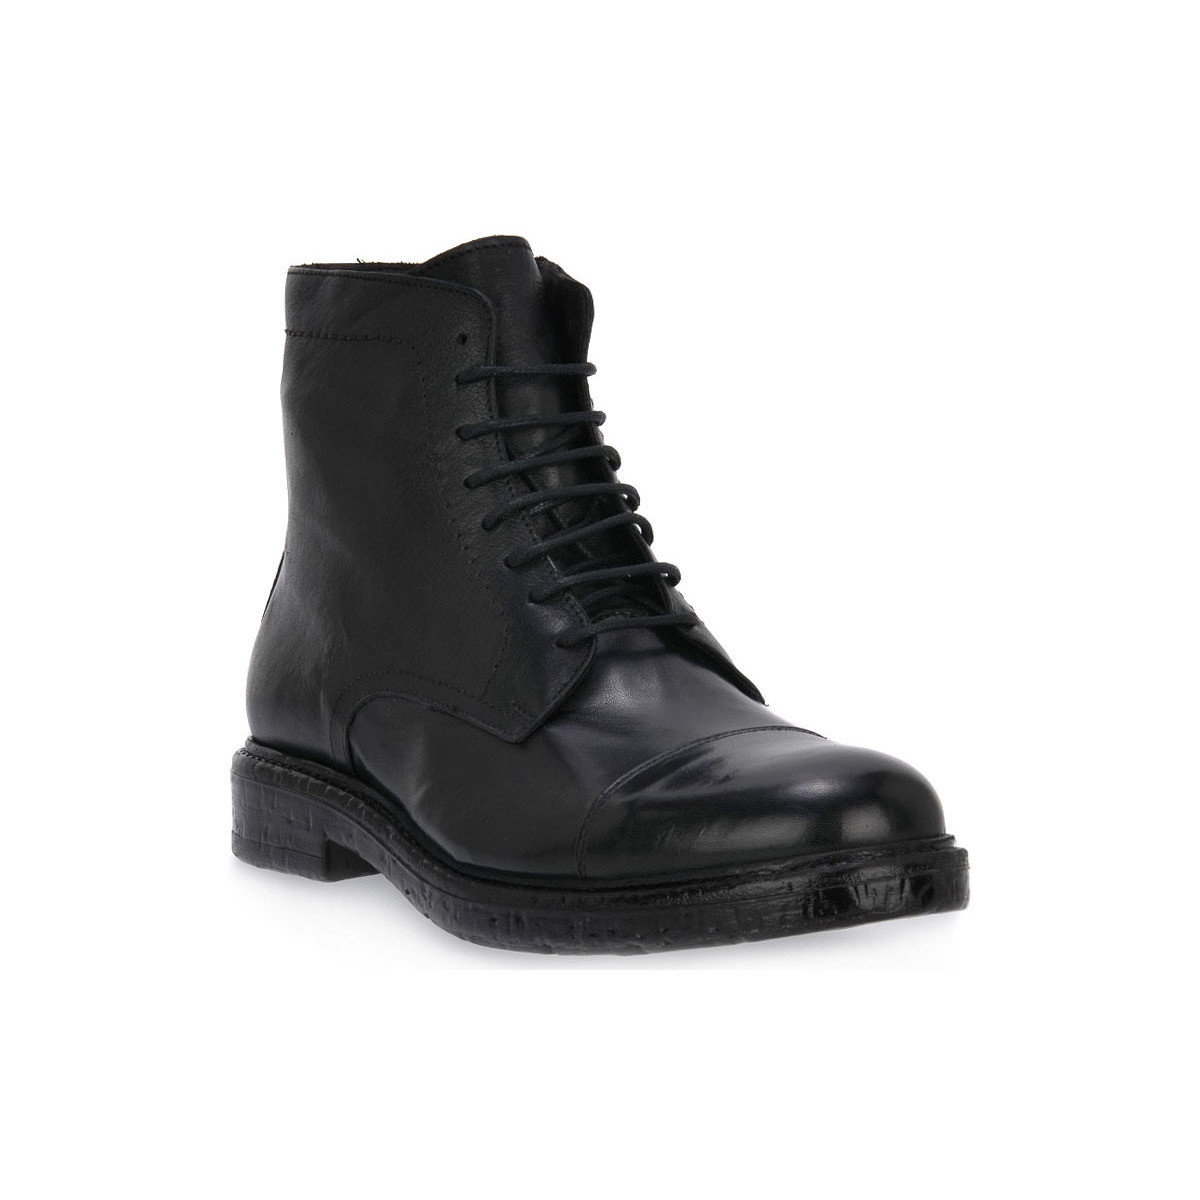 Pantofi Bărbați Mocasini Exton NERO SOFT Negru